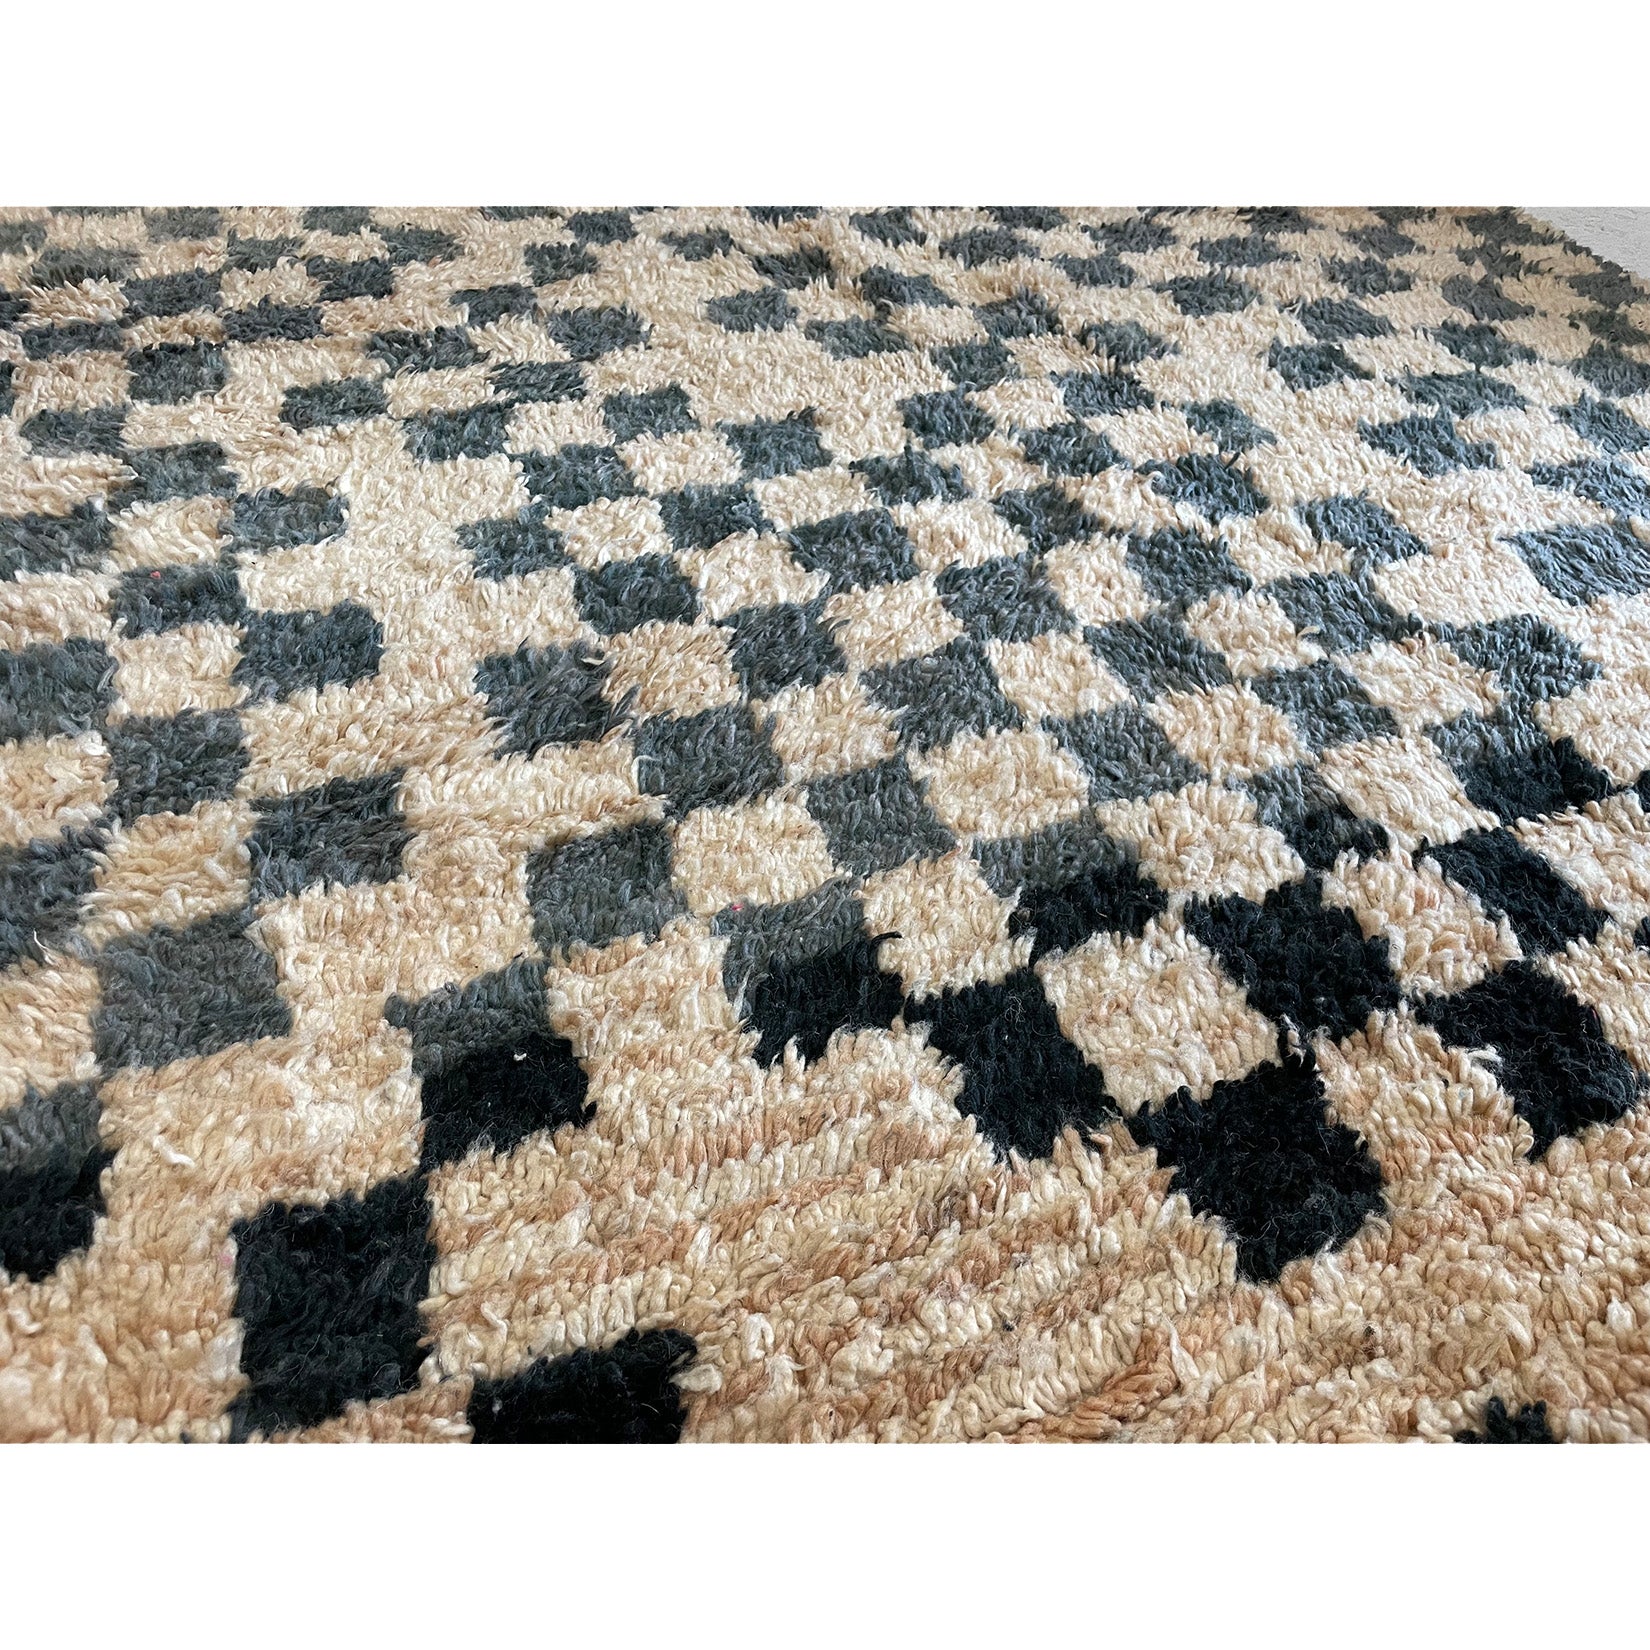 Handwoven black and white Moroccan checkered rug - Kantara | Moroccan Rugs